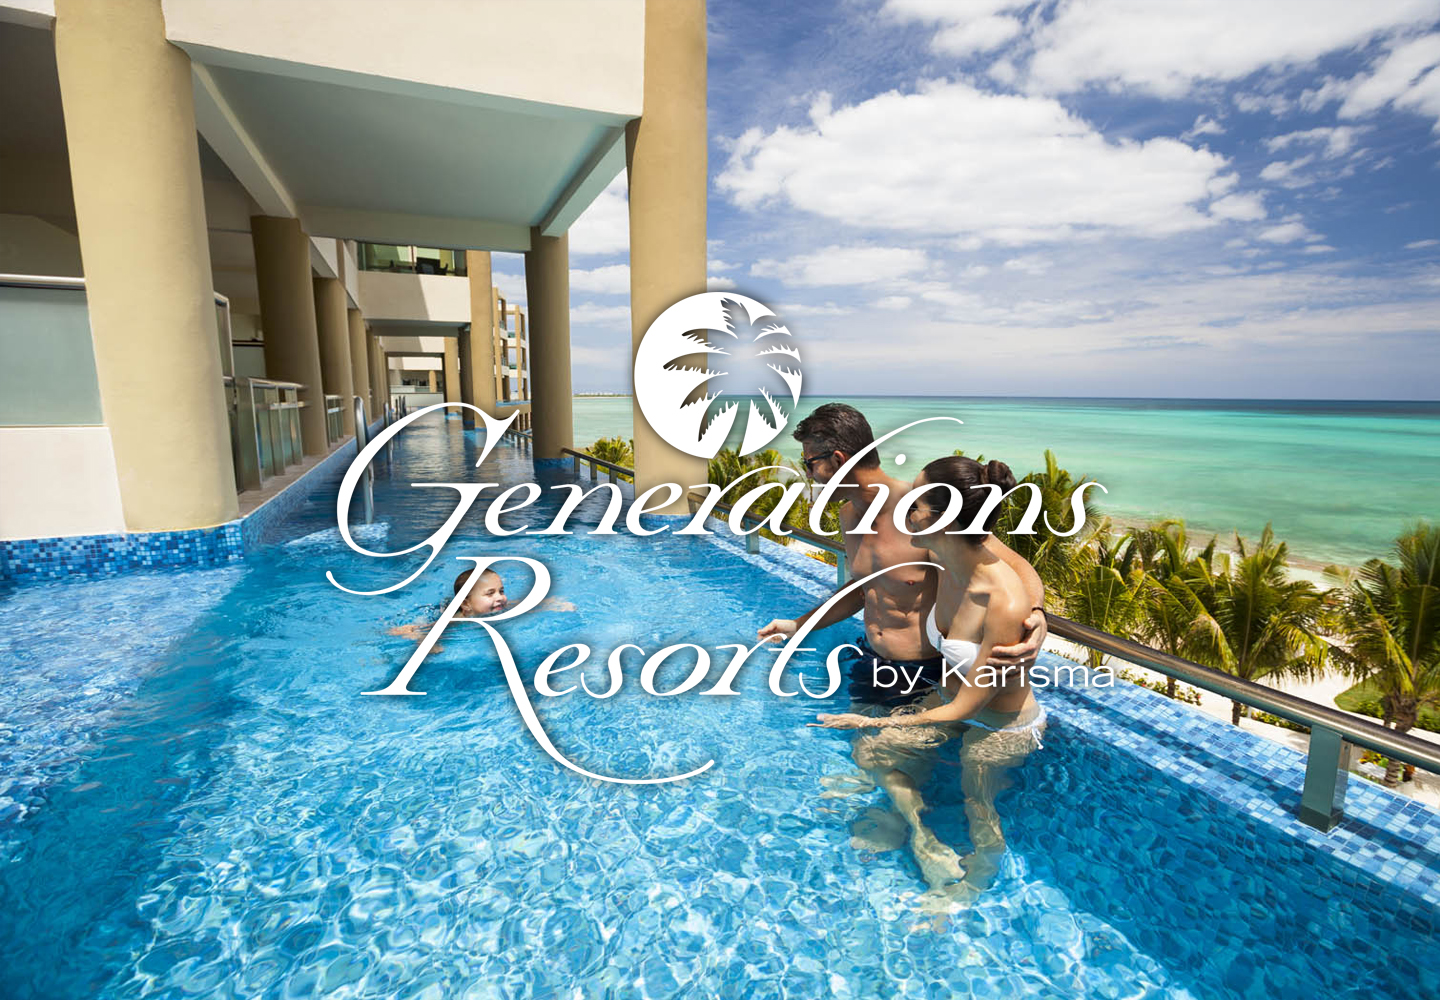 Generations Resorts